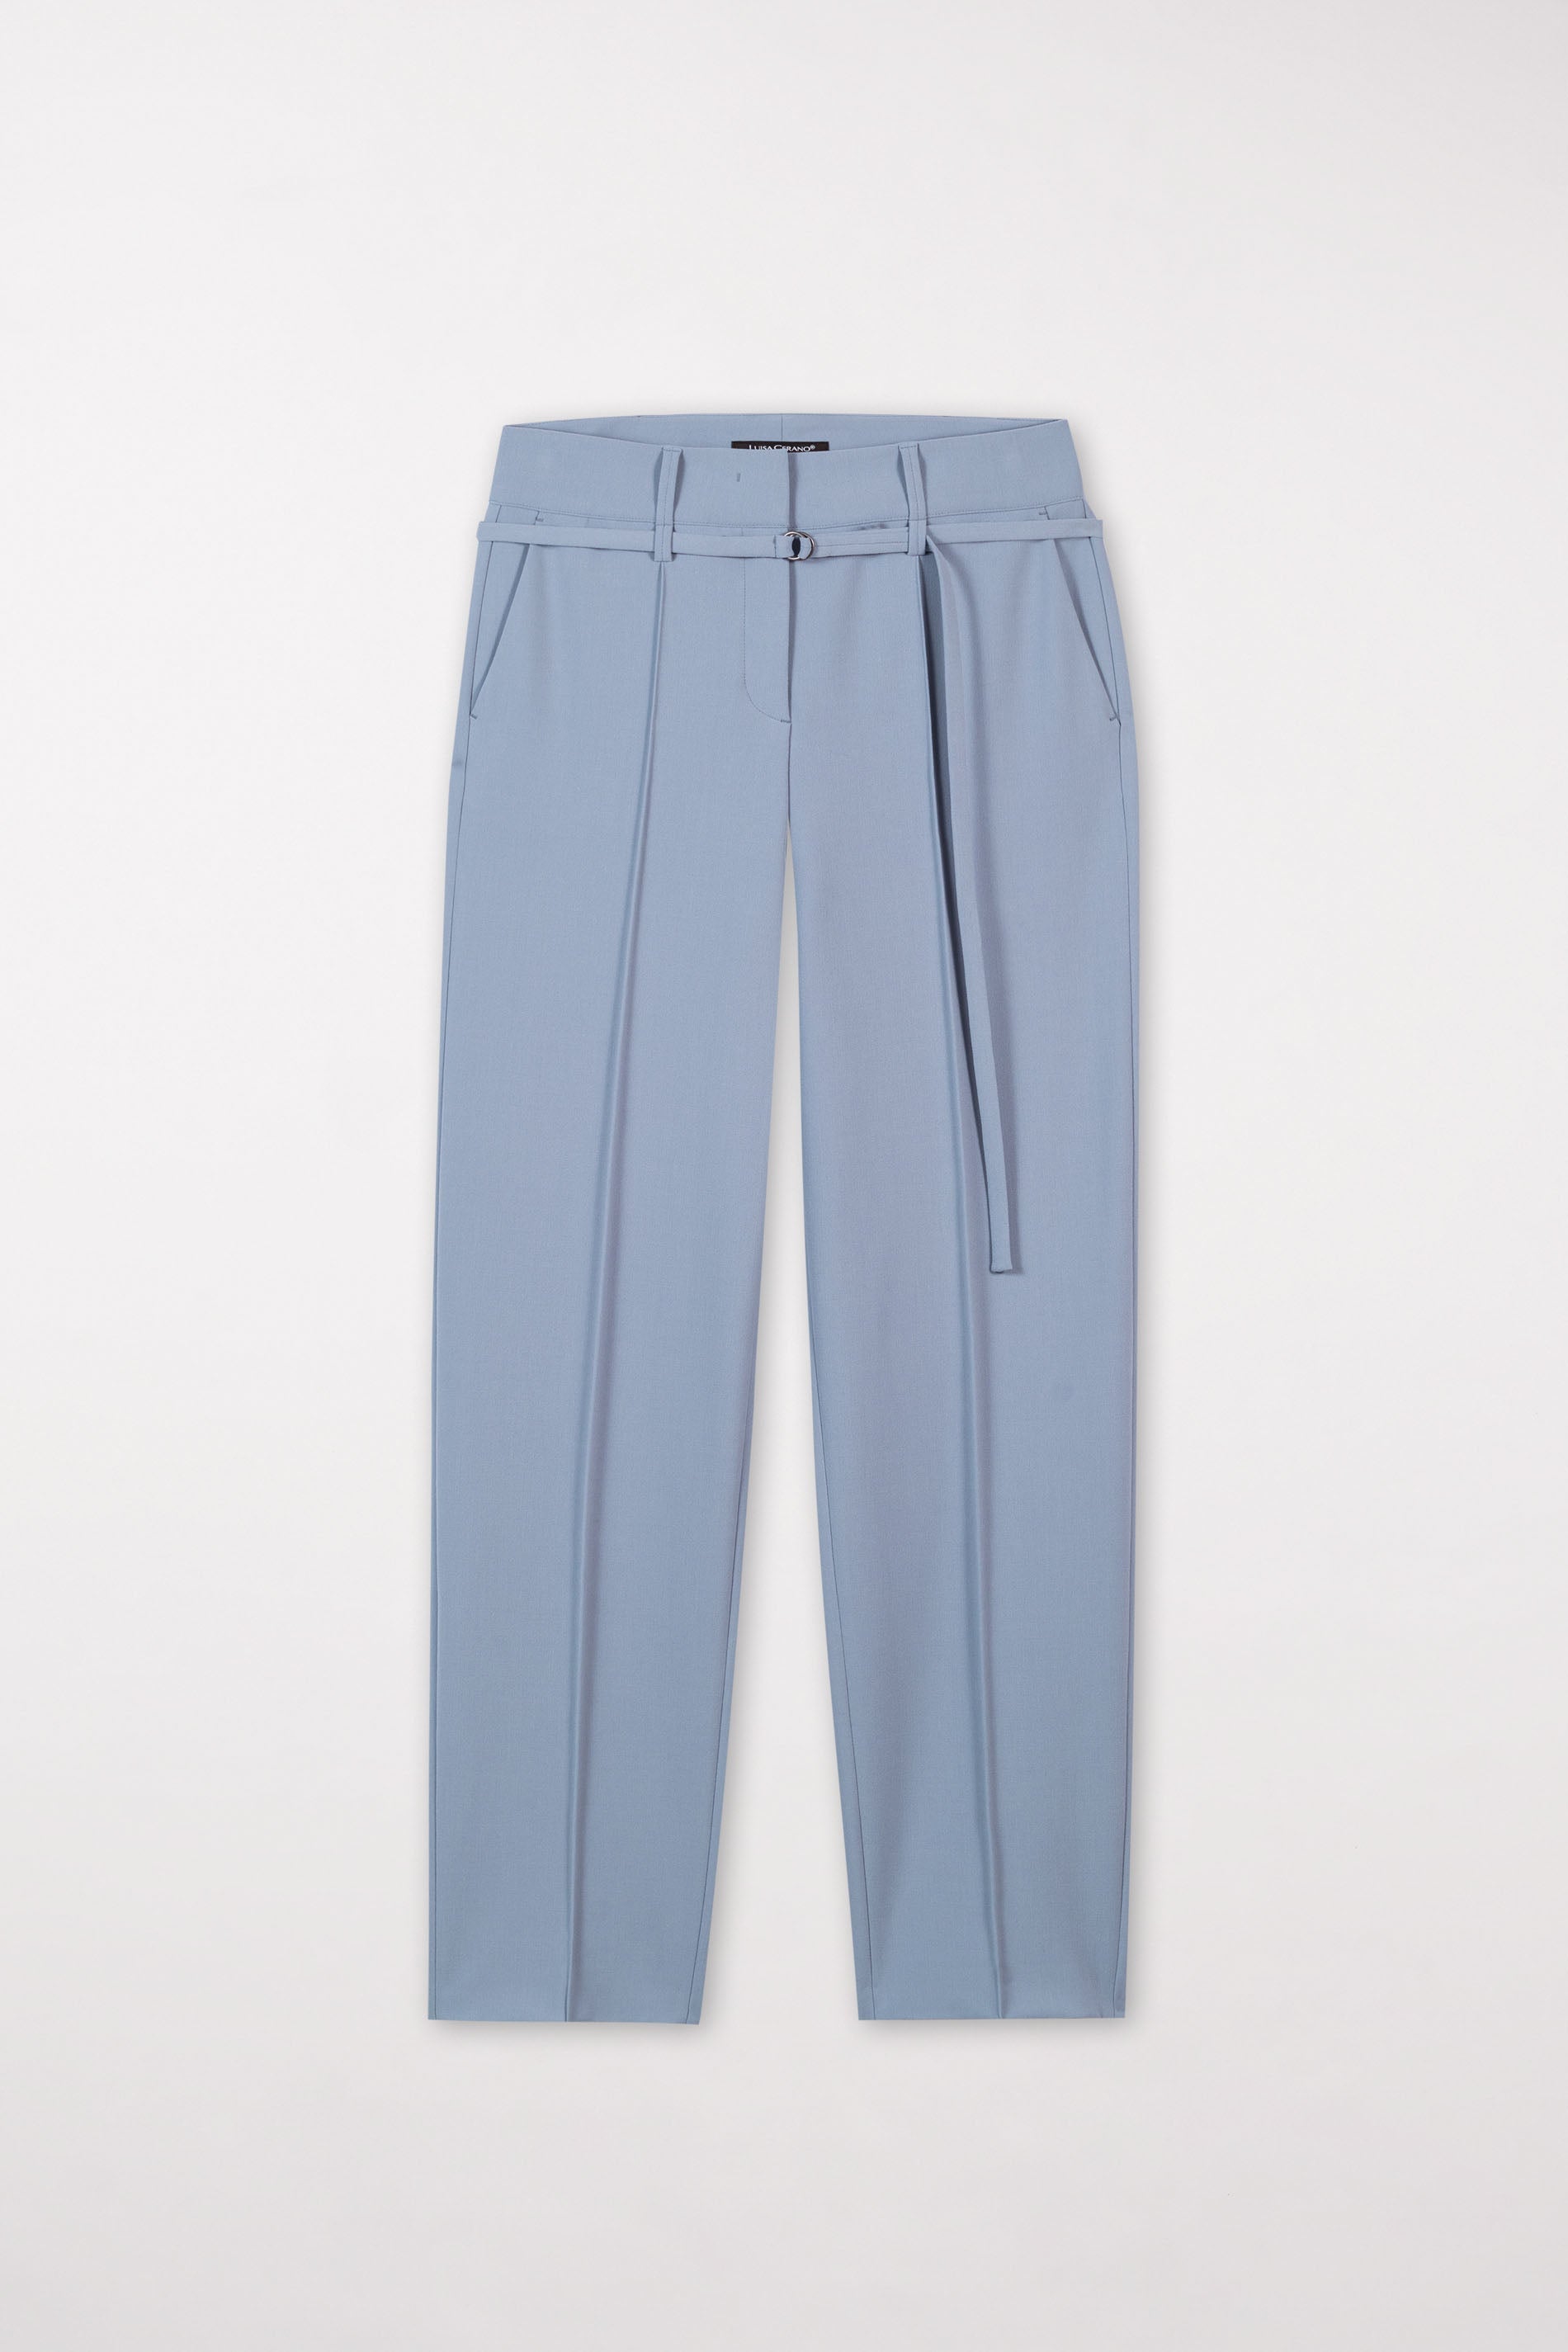 LUISA CERANO-OUTLET-SALE-Tapered Pants mit Bindegürtel-Hosen-34-faded blue-by-ARCHIVIST